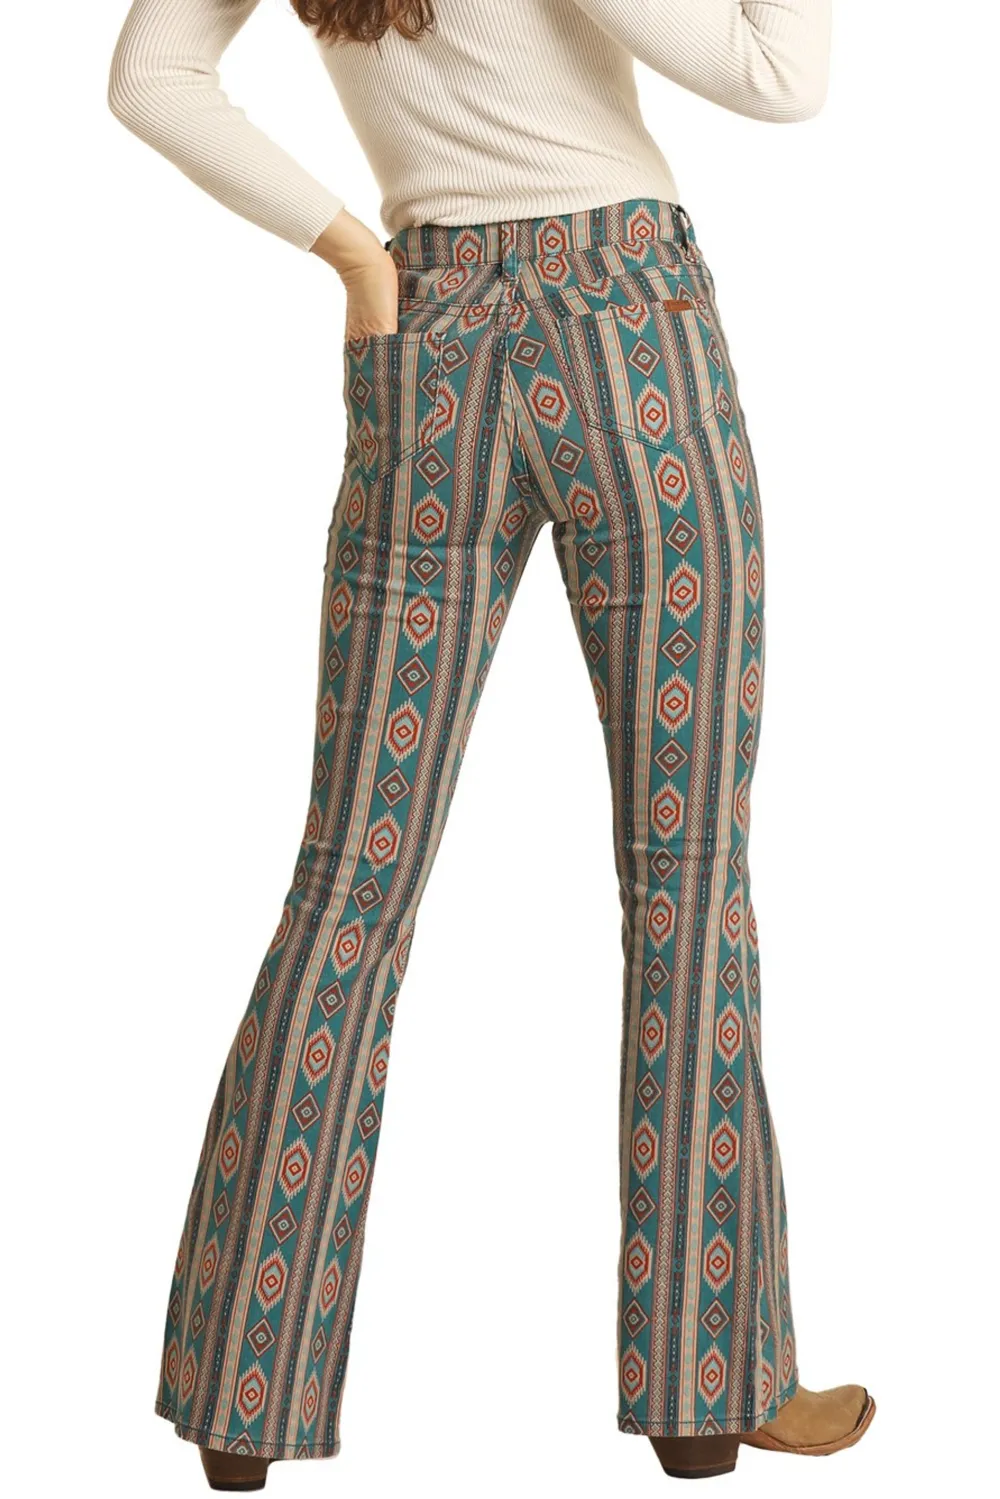 Women's vintage geometric print jeans flared pants